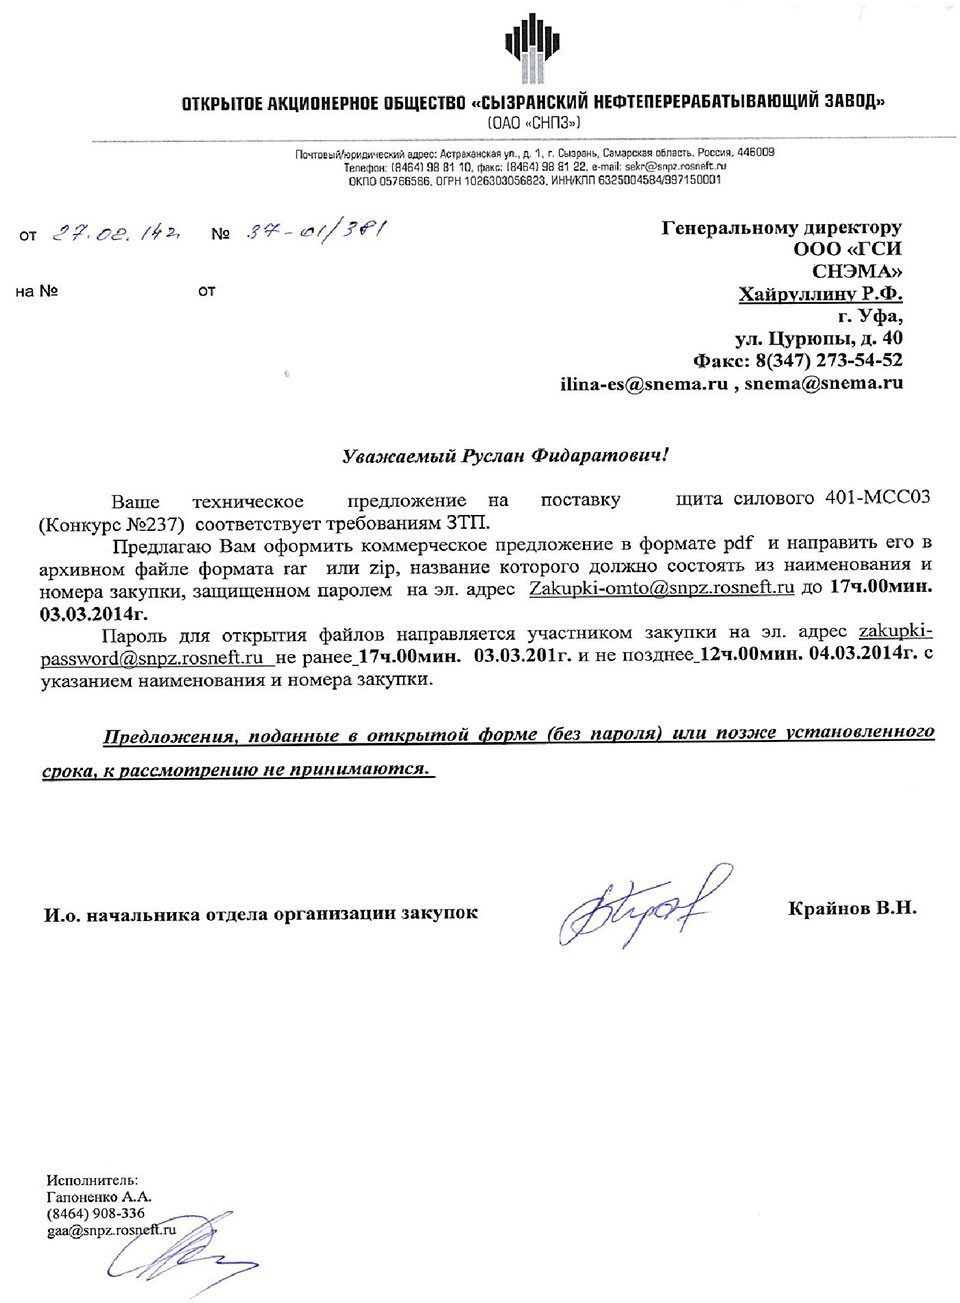 ГСИ Спецнефтеэнергомонтажавтоматика прошло процедуру аккредитации в ОАО «КНПЗ»